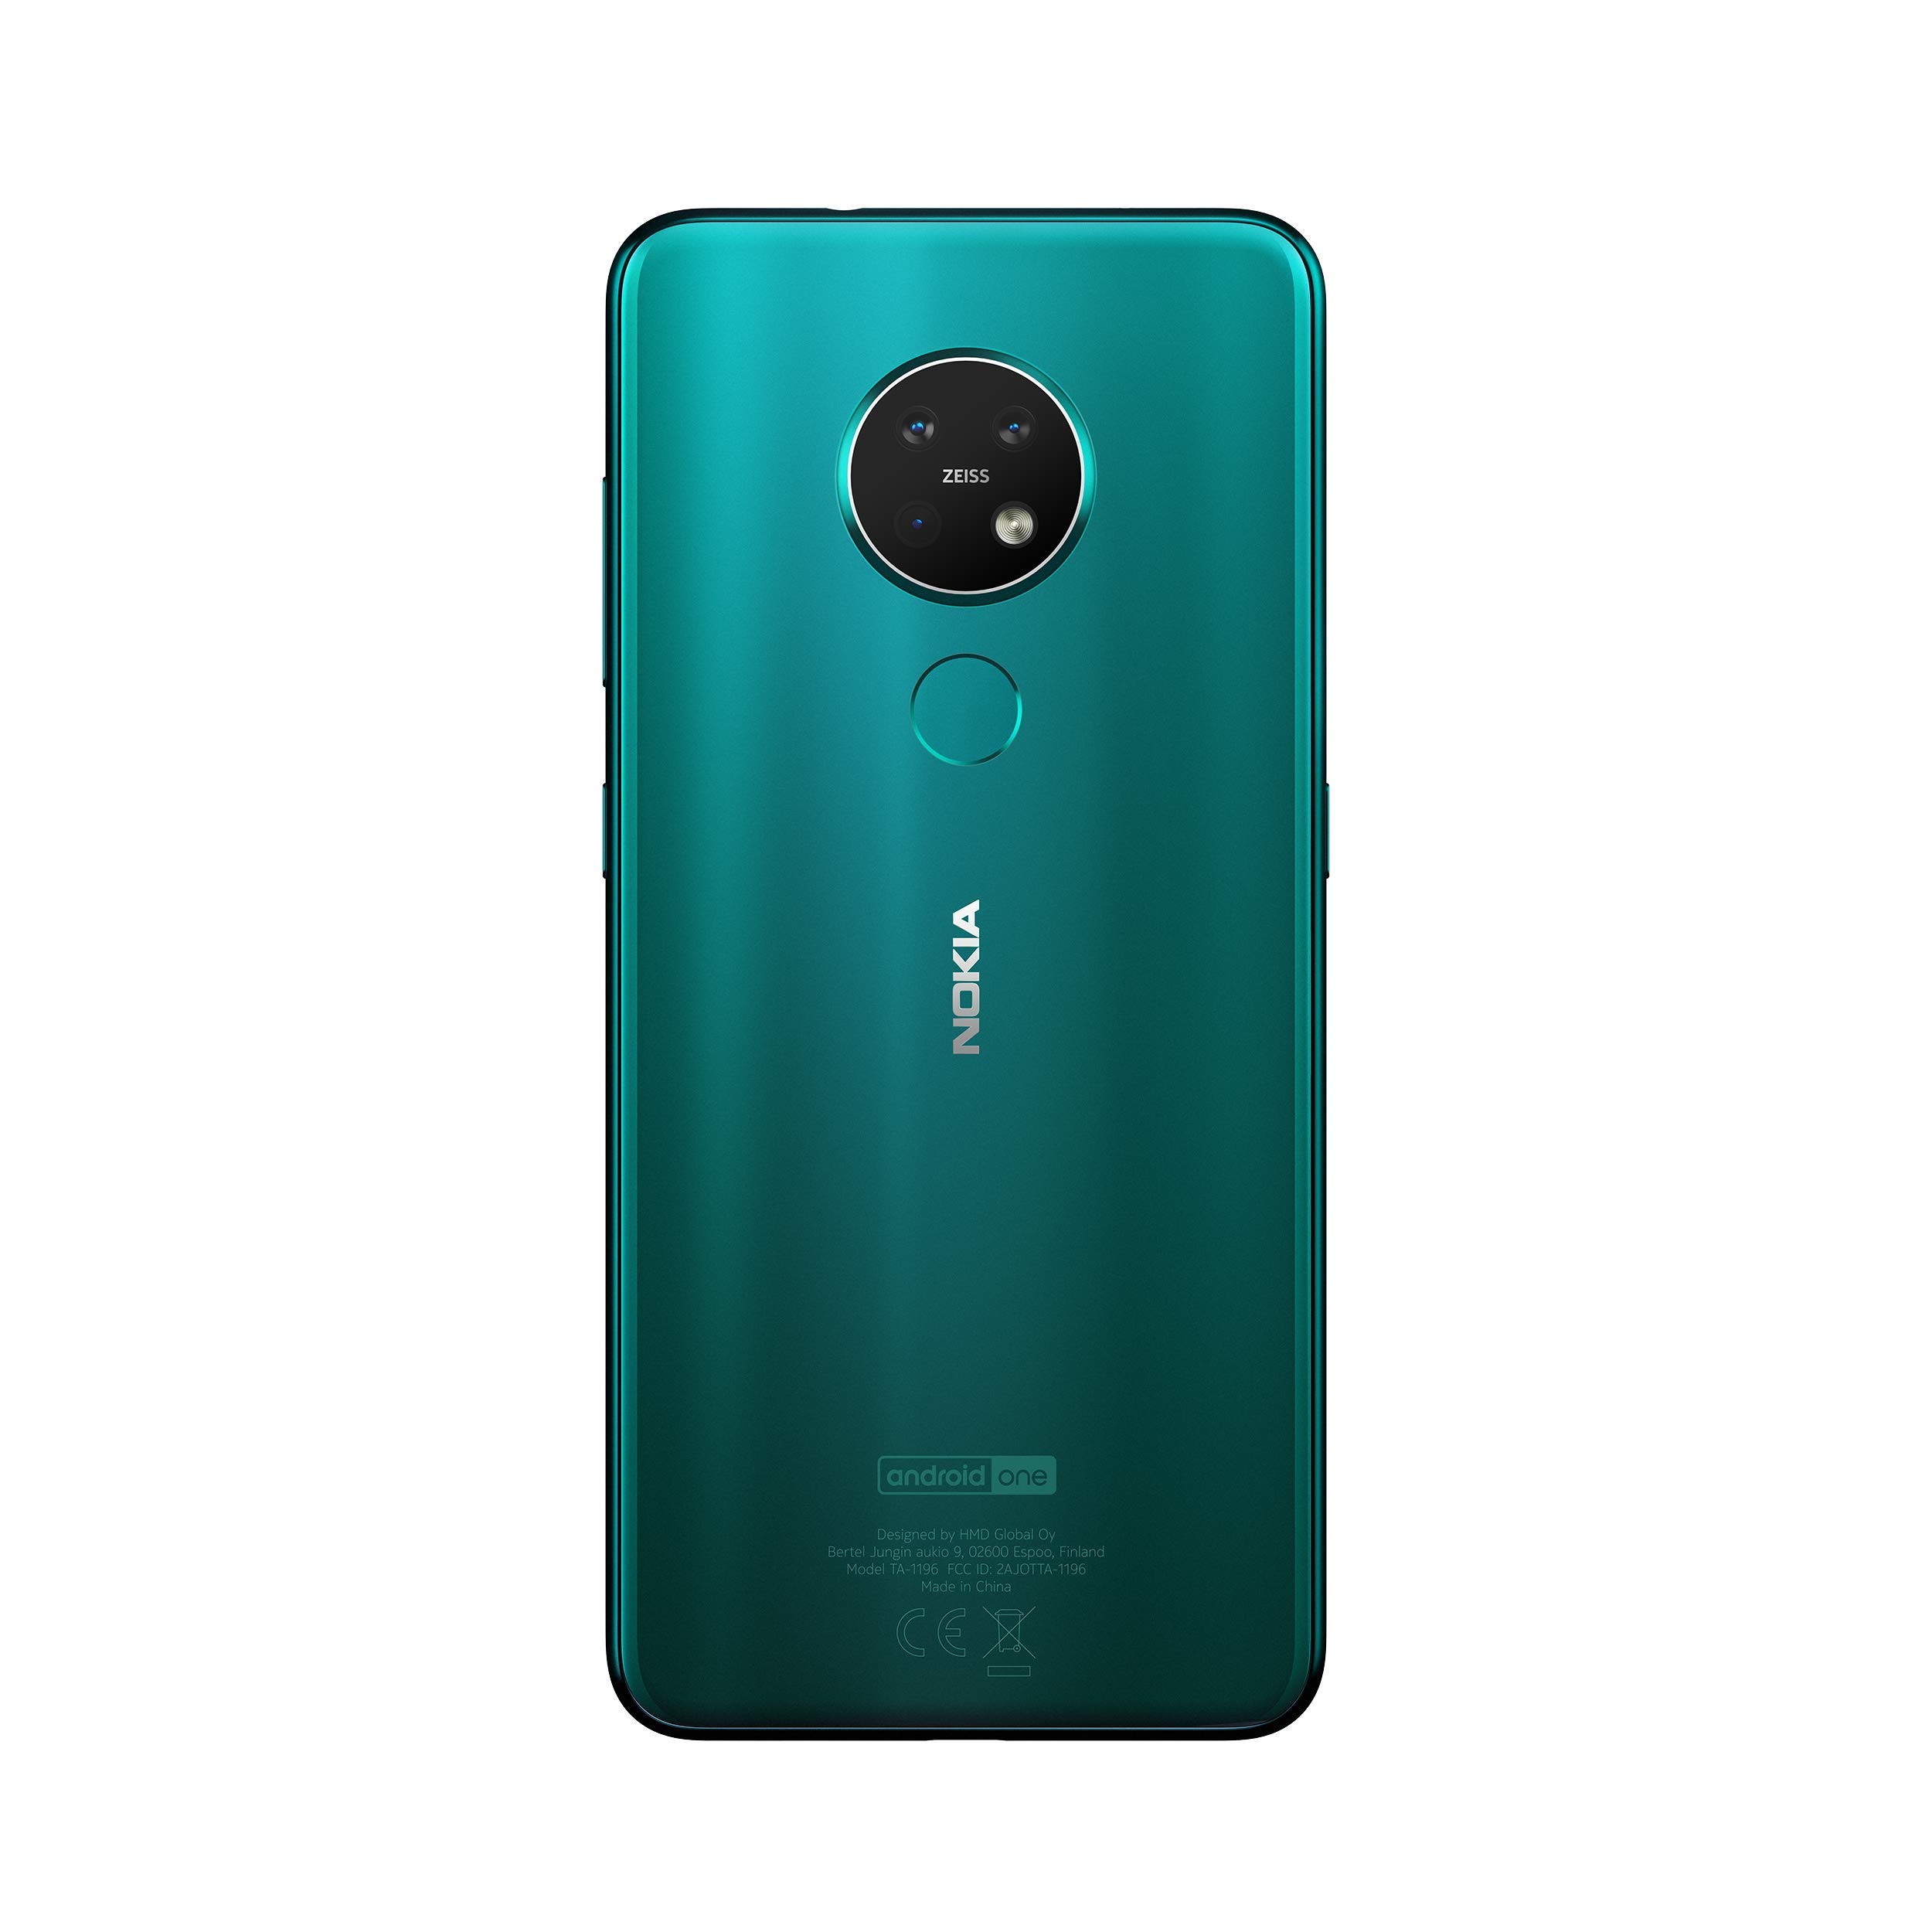 Nokia 7,2 128GB LTE cyan green Smartphone (2019) sehr gut